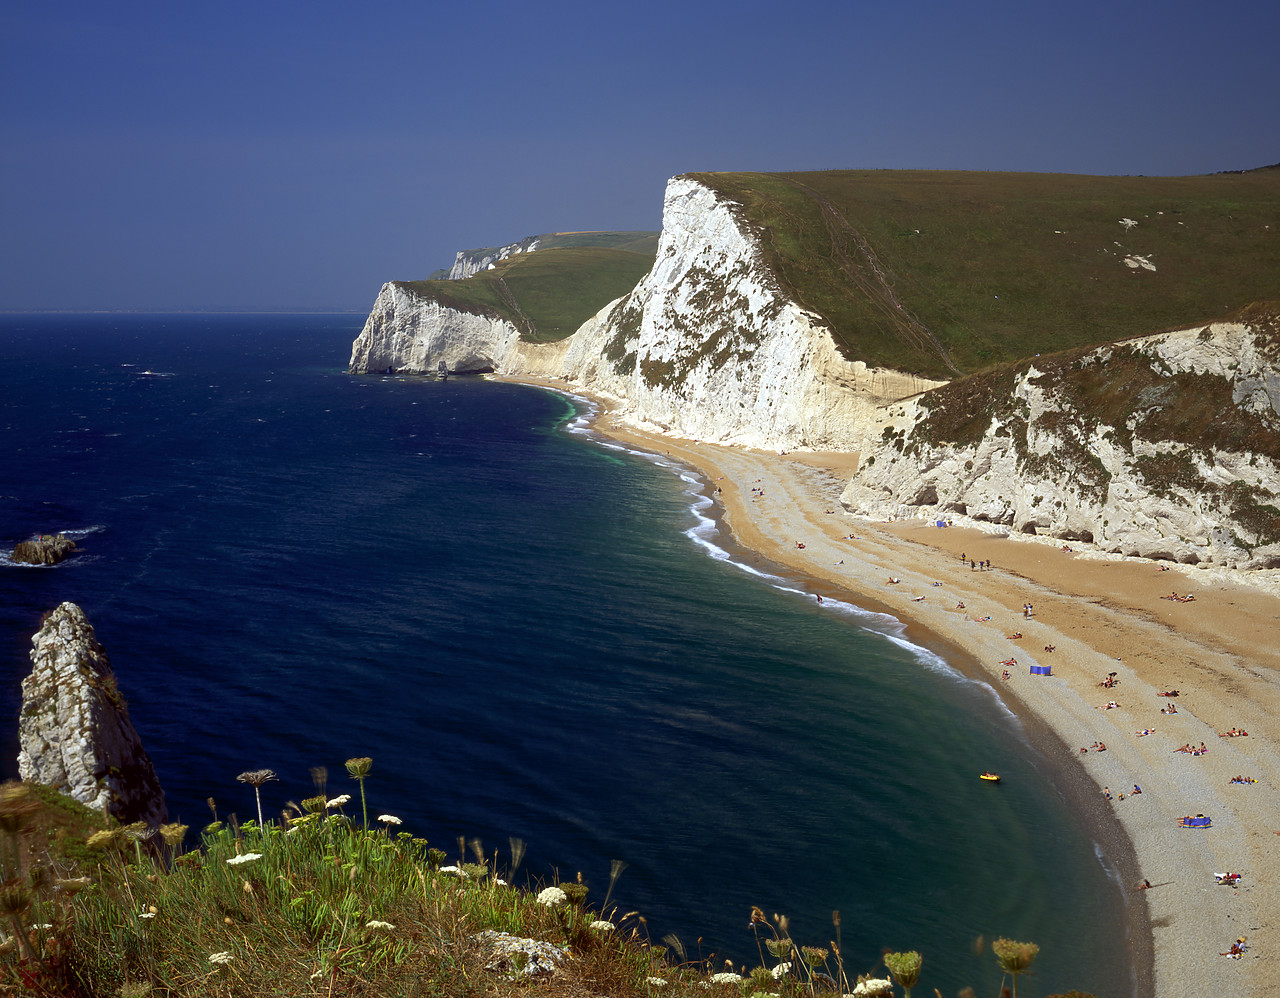 #955578-1 - Coastline at Bat's Head, Dorset, England